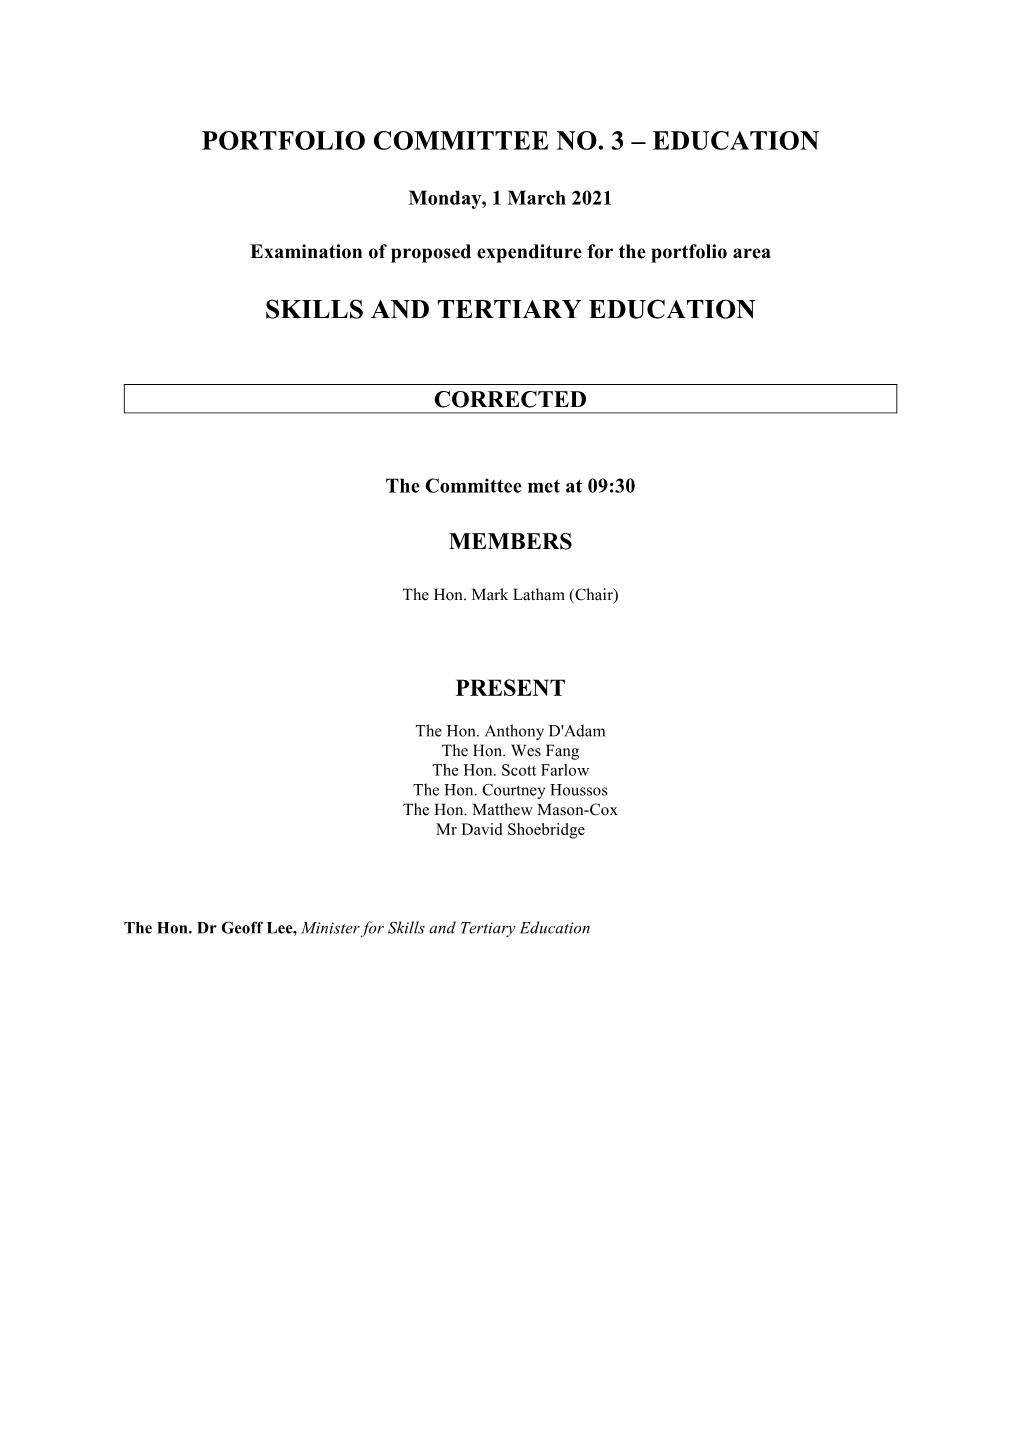 Portfolio Committee No. 3 – Education Skills and Tertiary Education